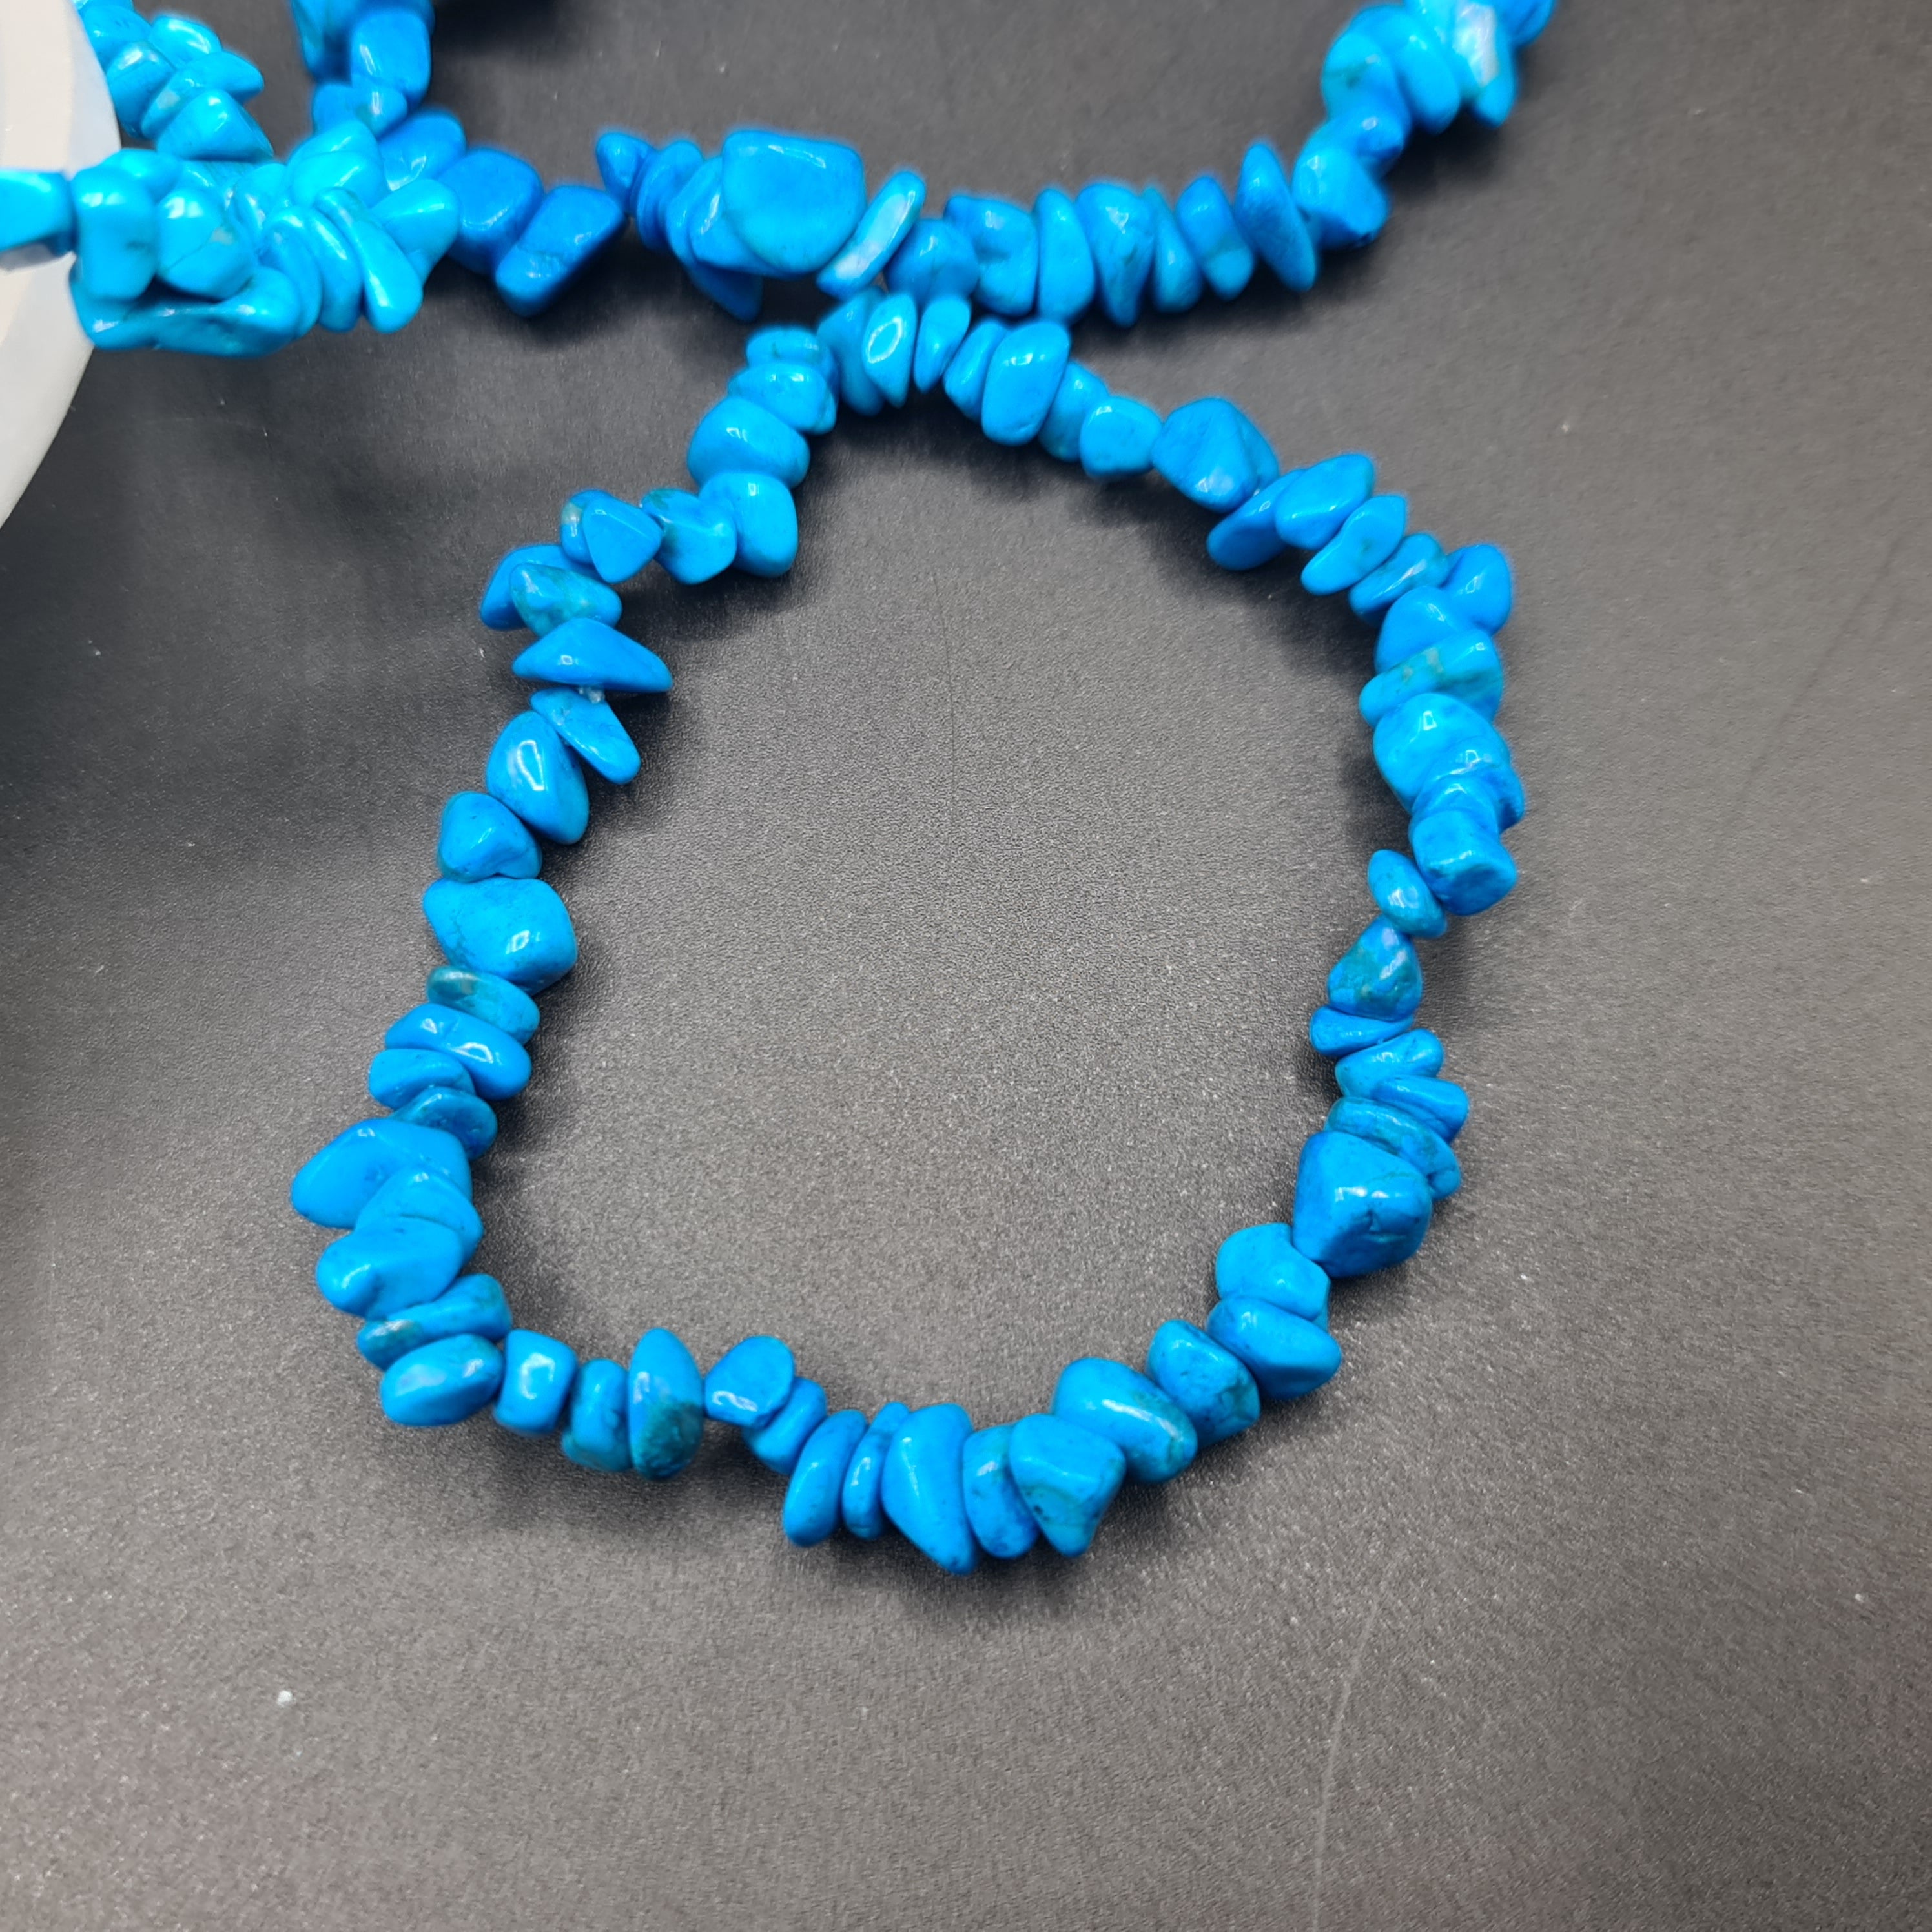 Blue Howlite Chip Bracelet, Healing Crystal Bracelet, Blue Howlite Stone Bracelet, Stretchy Elasticated Bracelet, Howlite Jewellery